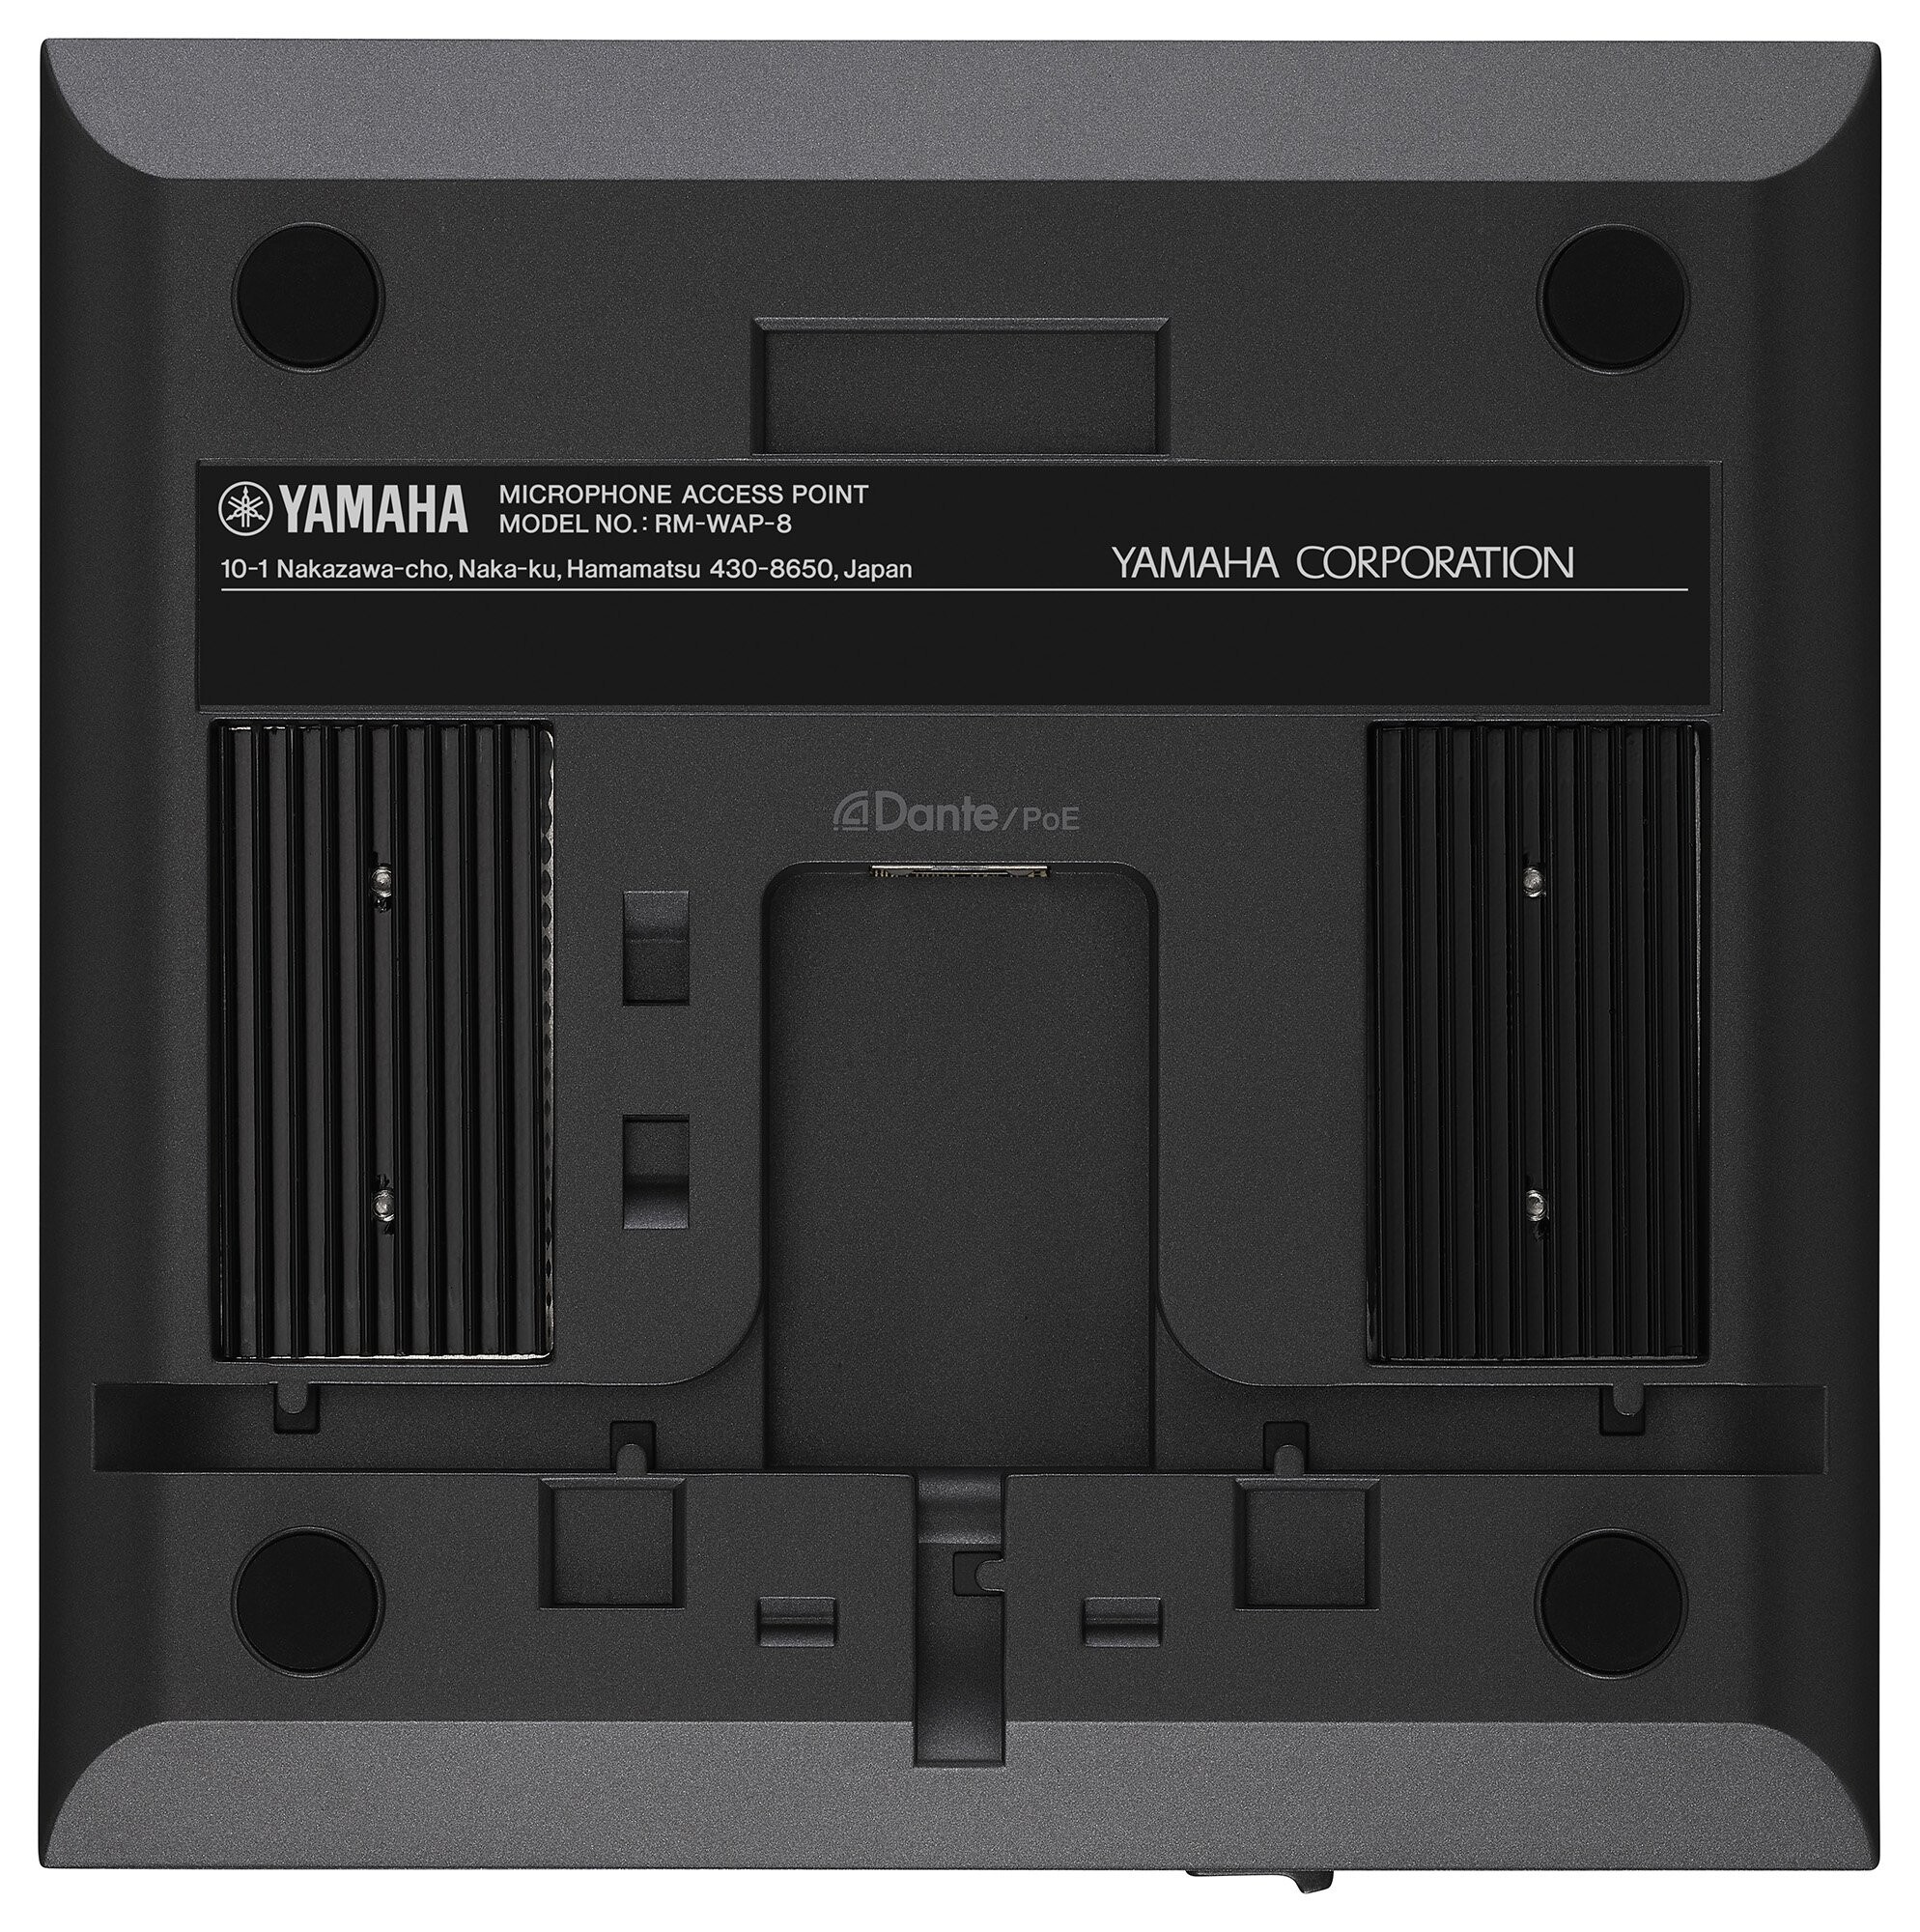 Yamaha-RM-WAP-8-8-Kanal-Wireless-Access-Point